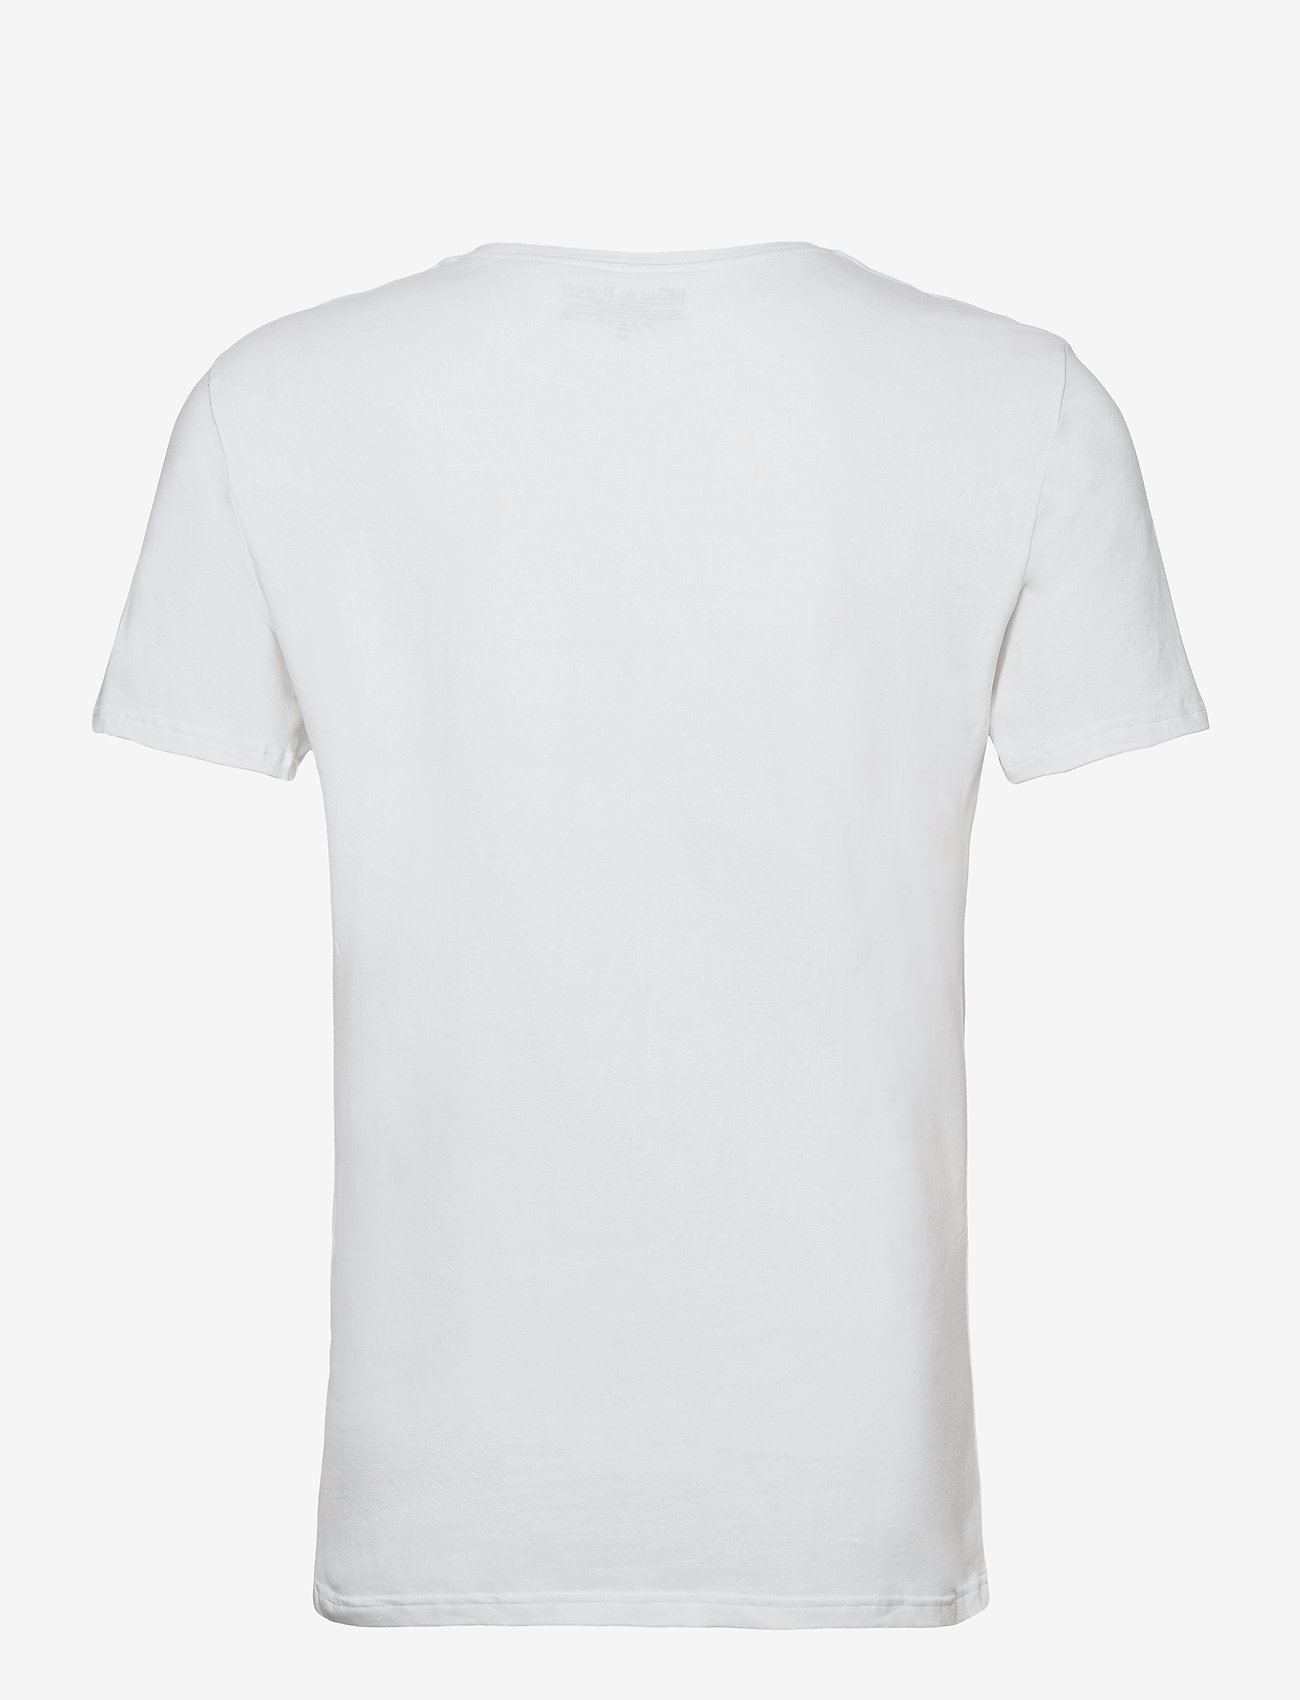 Bread & Boxers - V-Neck T-shirt - zemākās cenas - white - 1